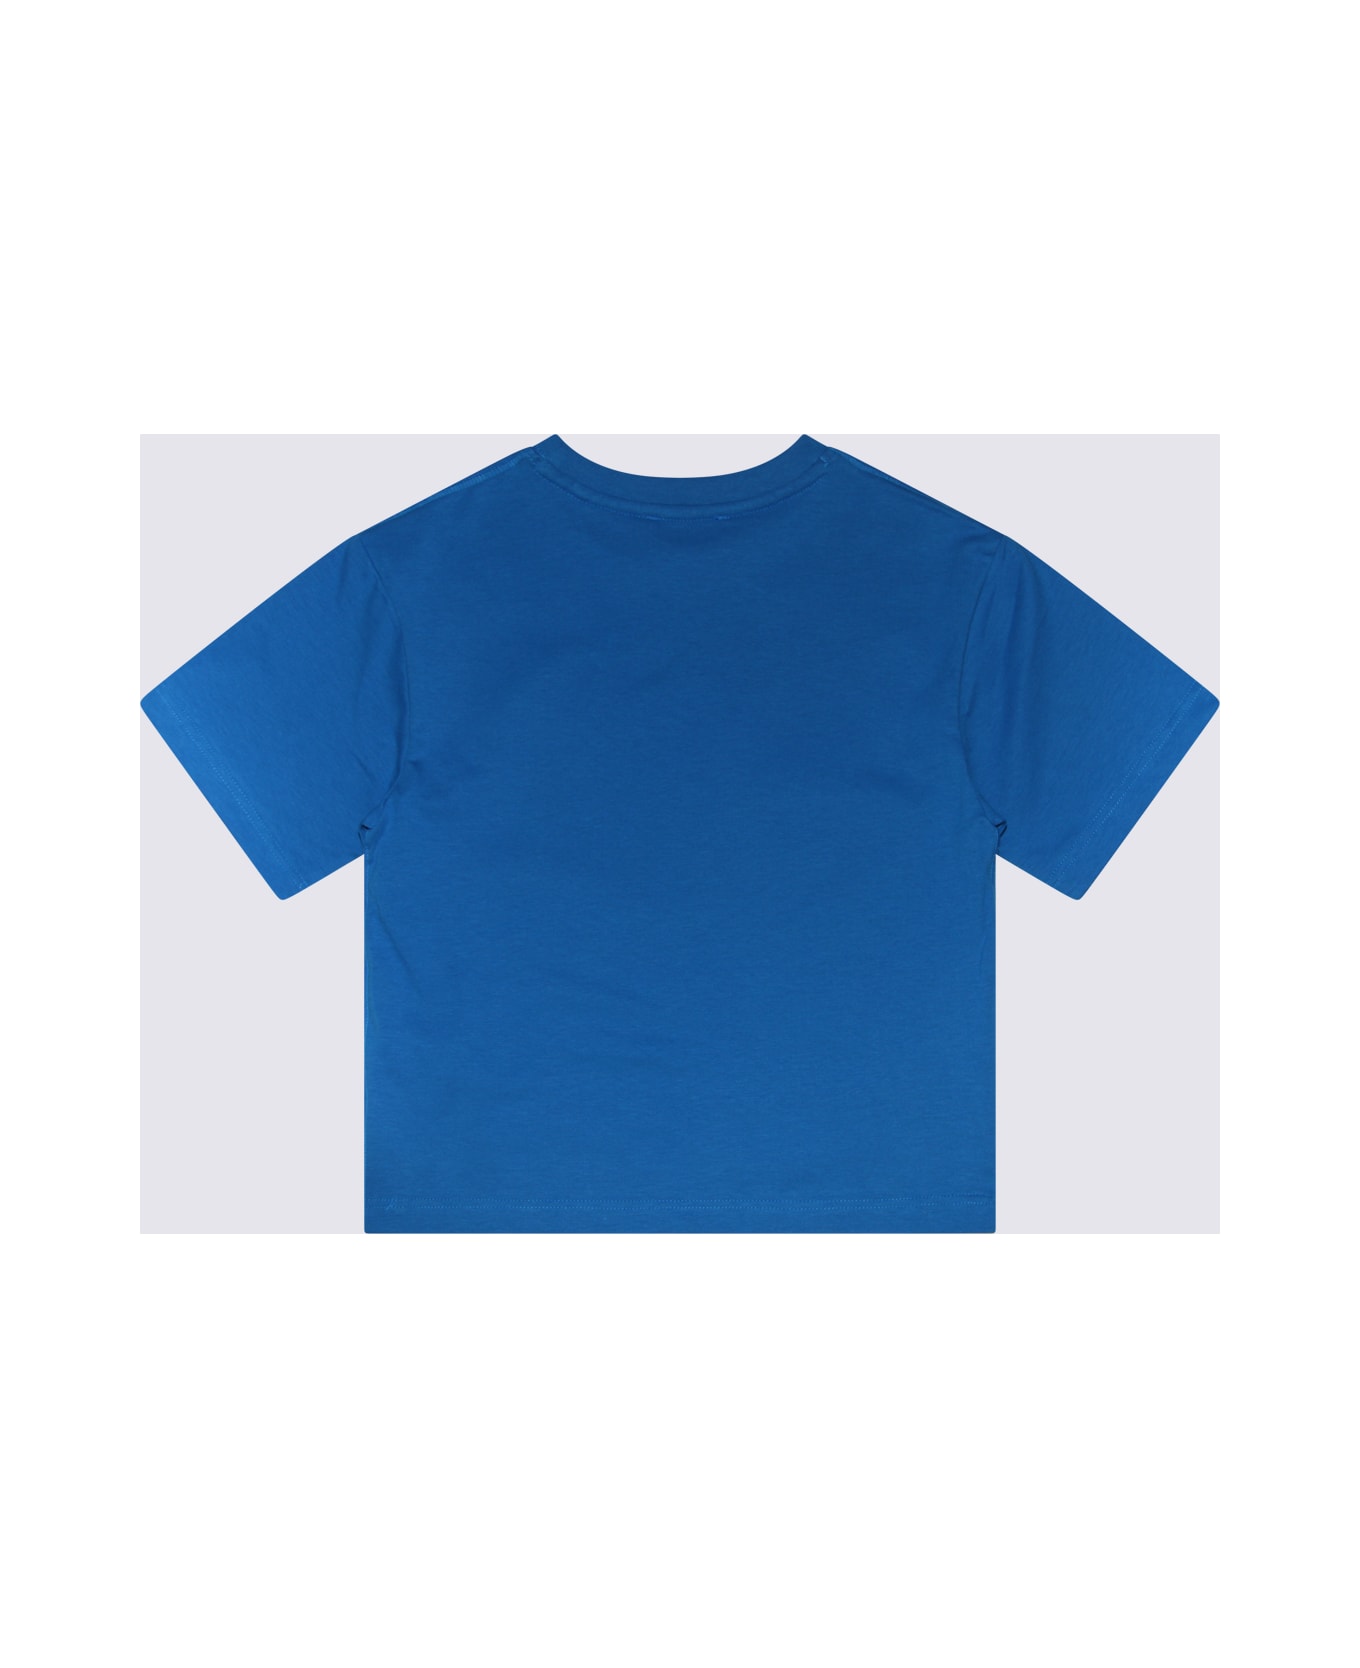 Marc Jacobs Blue, White And Black Cotton T-shirt - BLU ELETTRICO